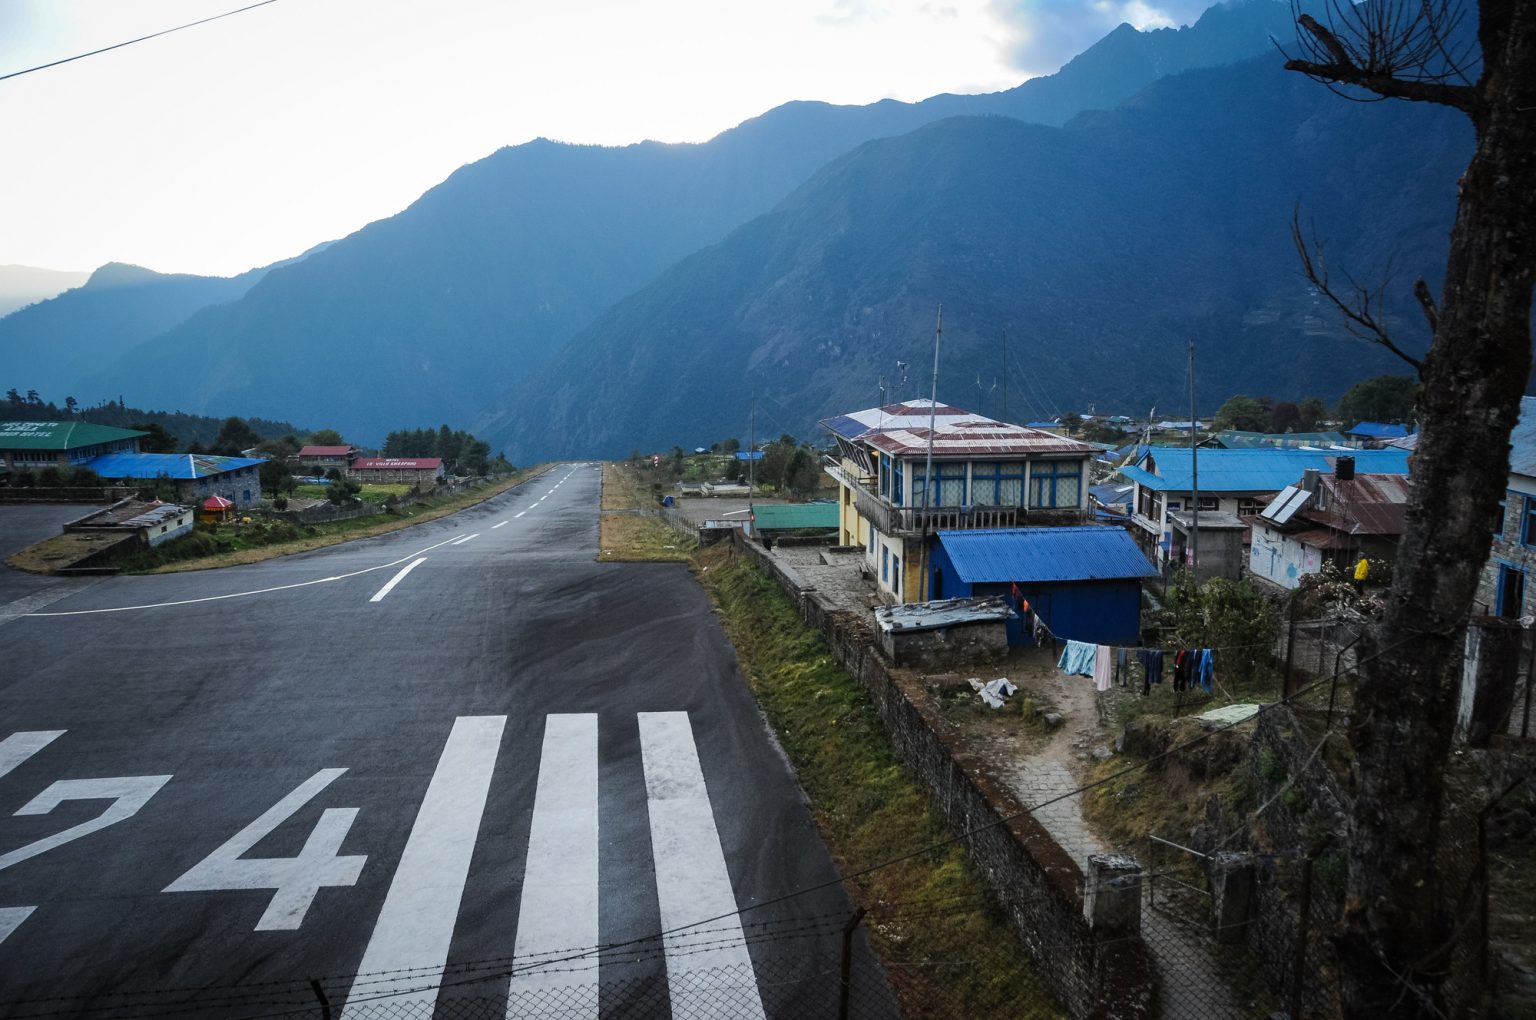 Lukla airport, Nepal - By Mountain People